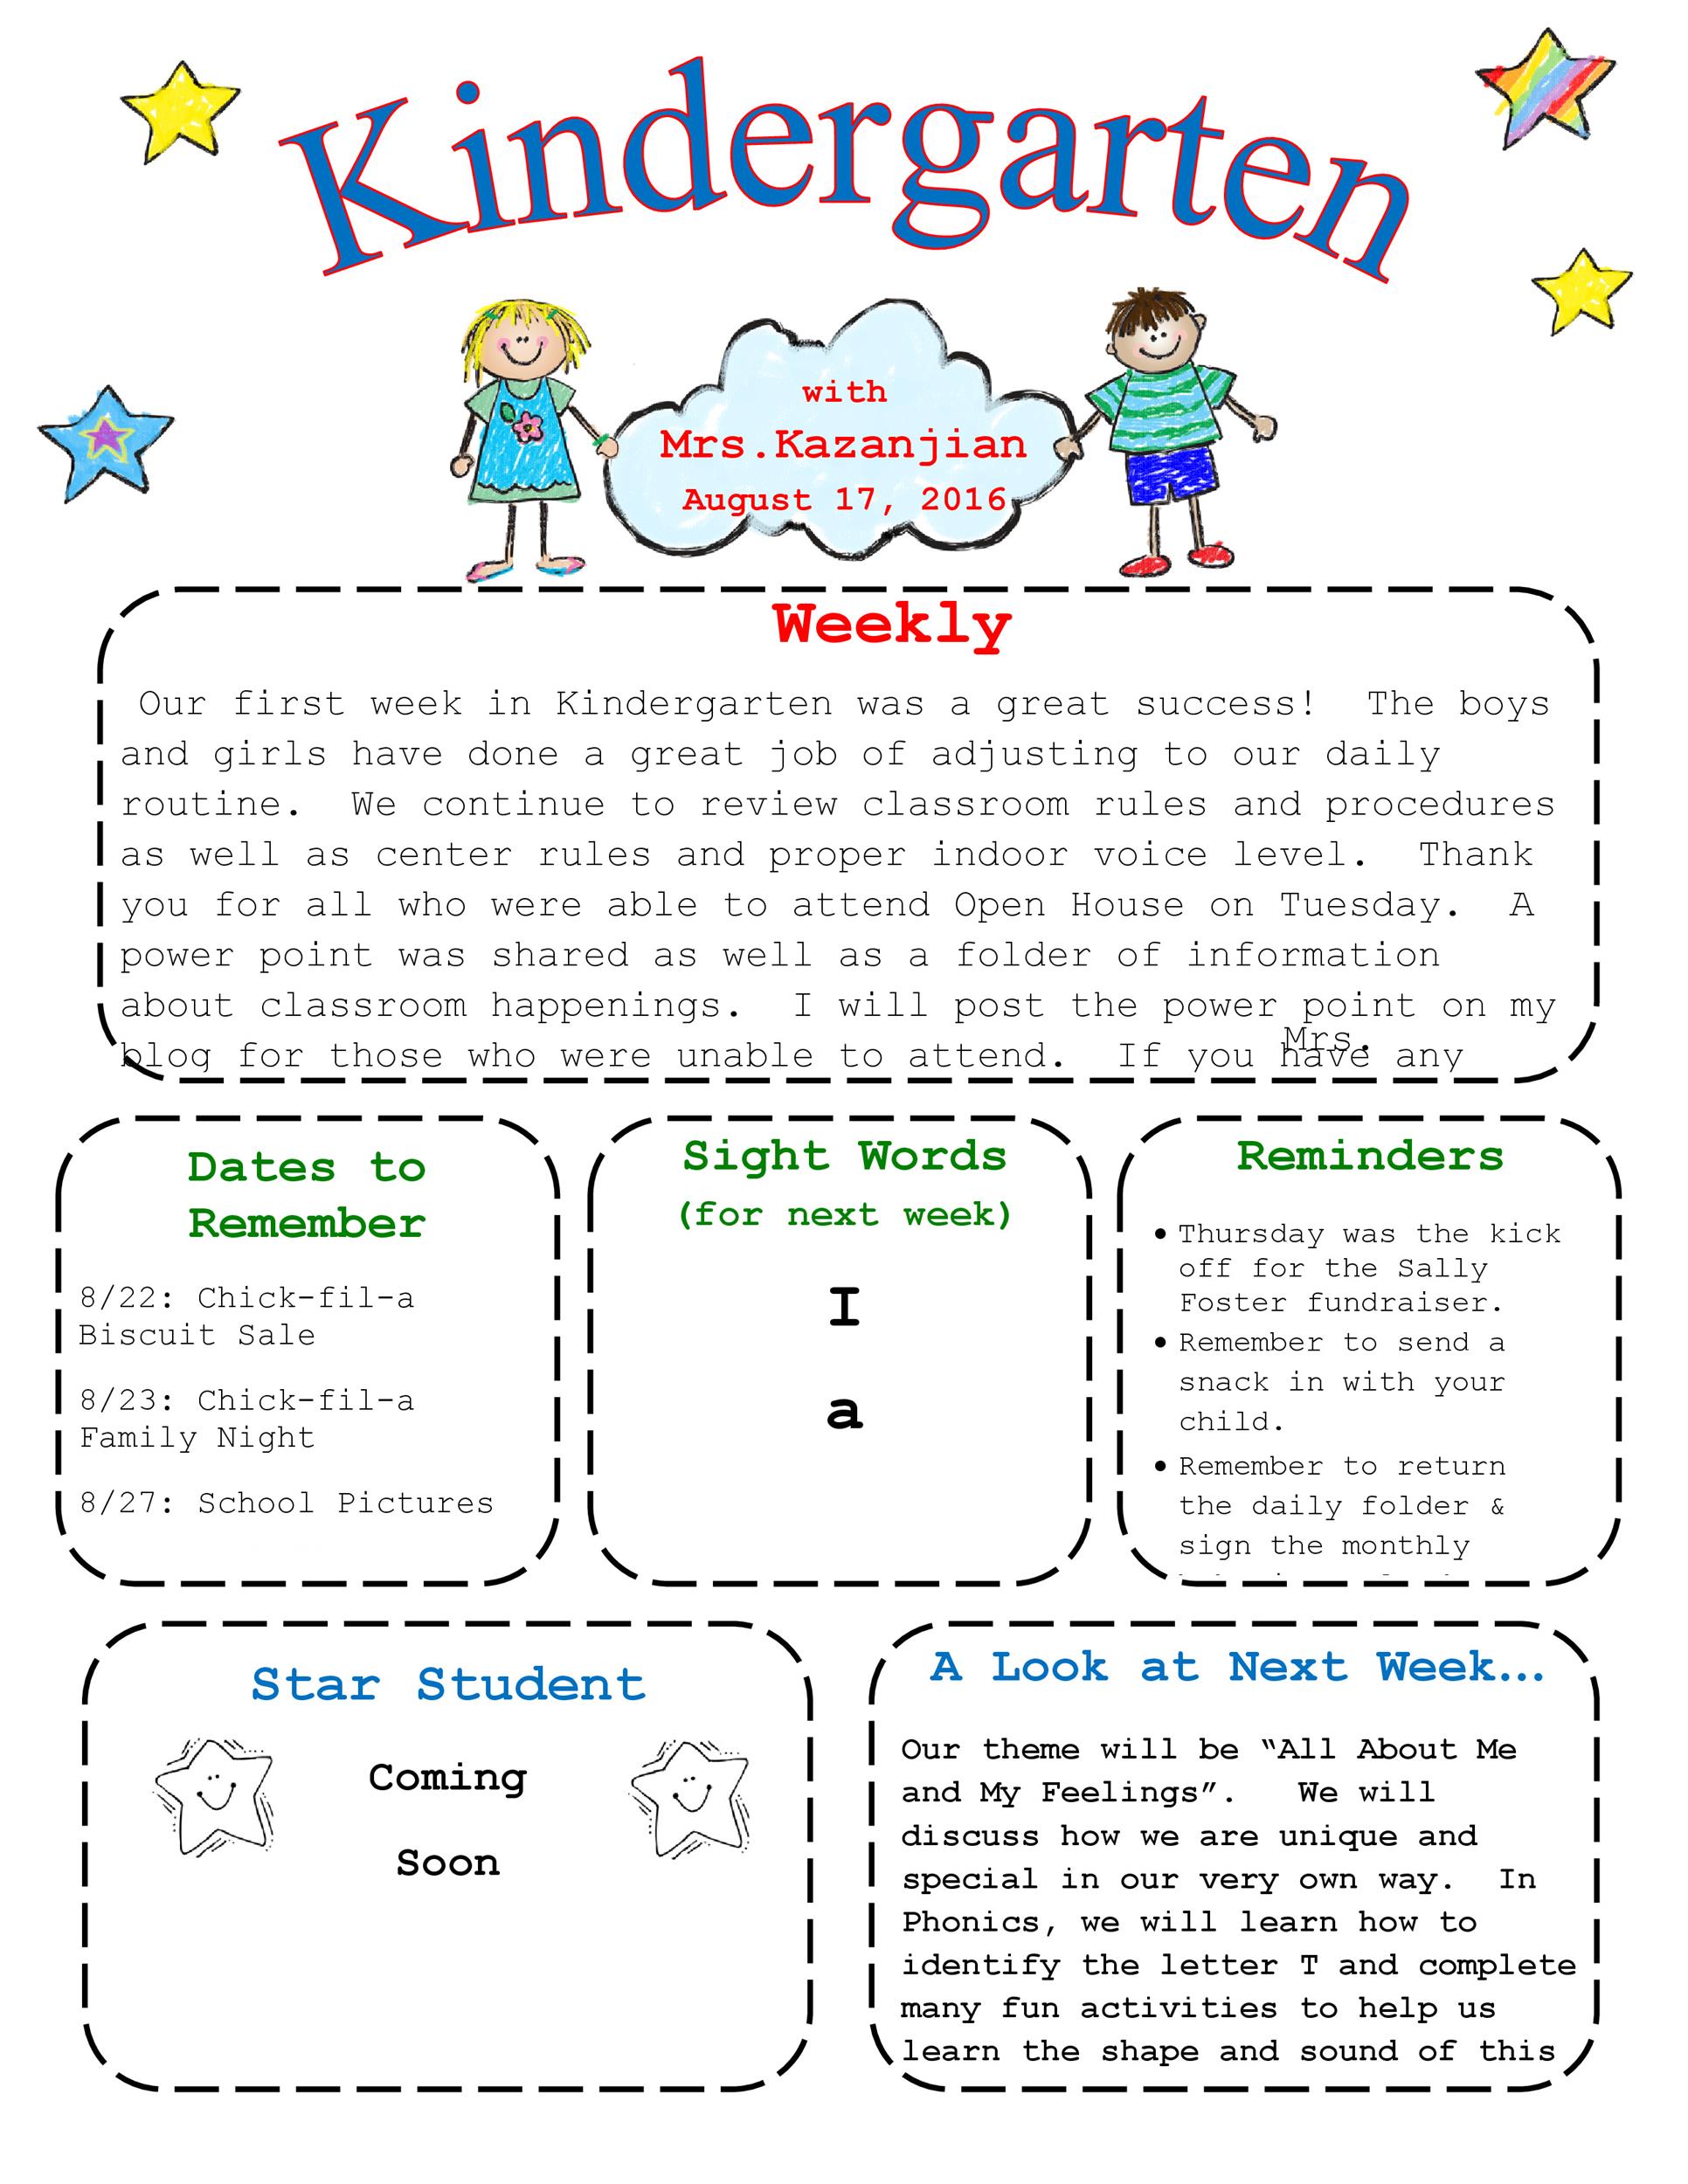 Printable Newsletter Template For Preschool Printable Templates